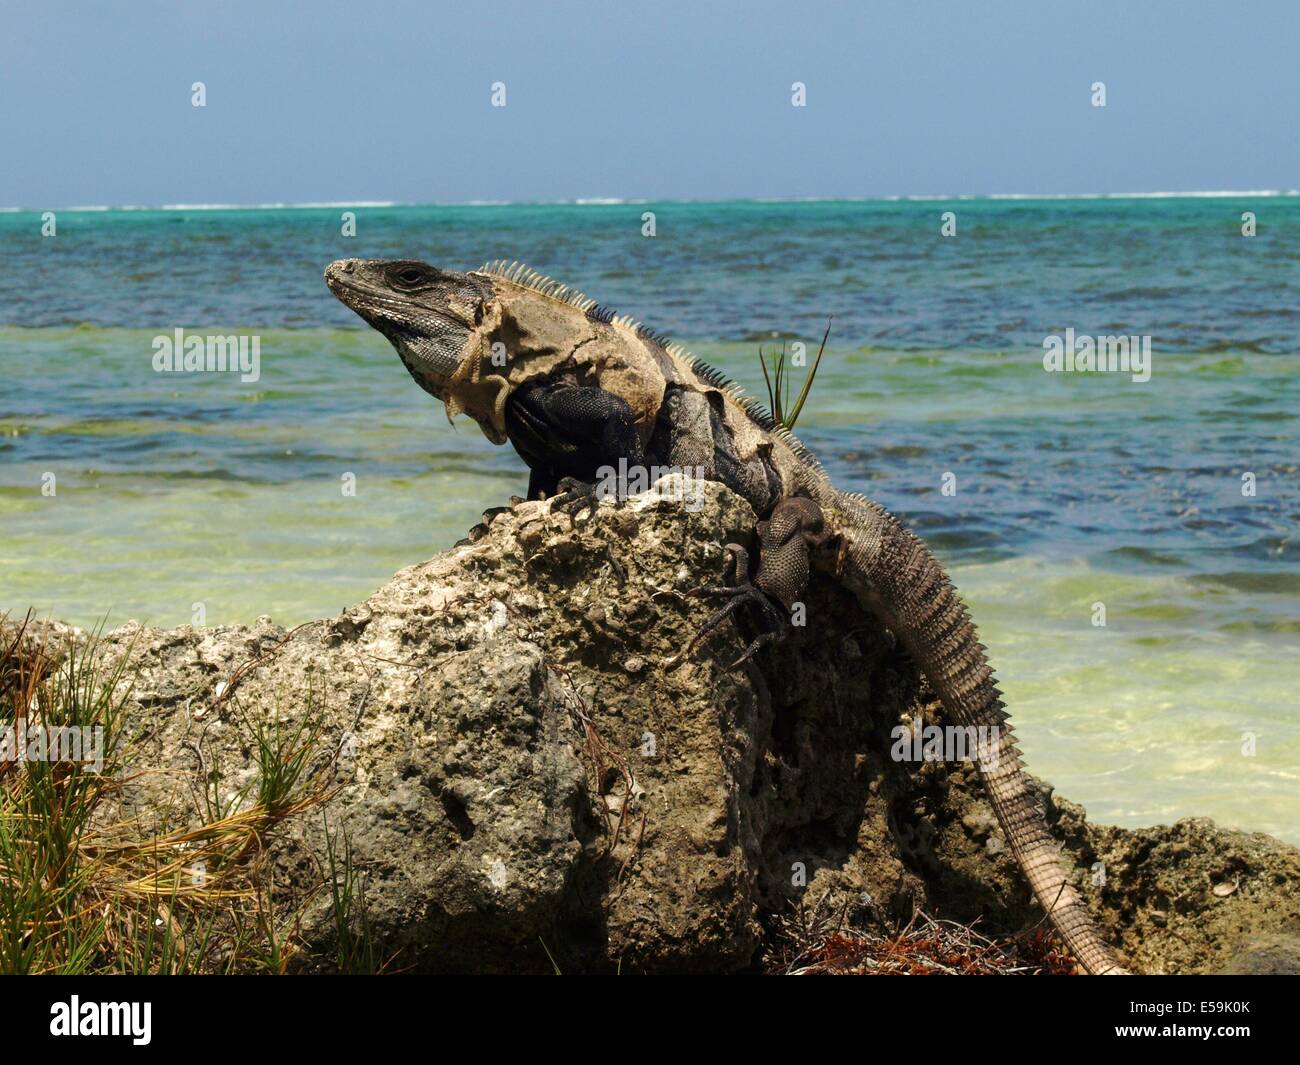 An Iguana sunning on a rock on an ocean background Stock Photo